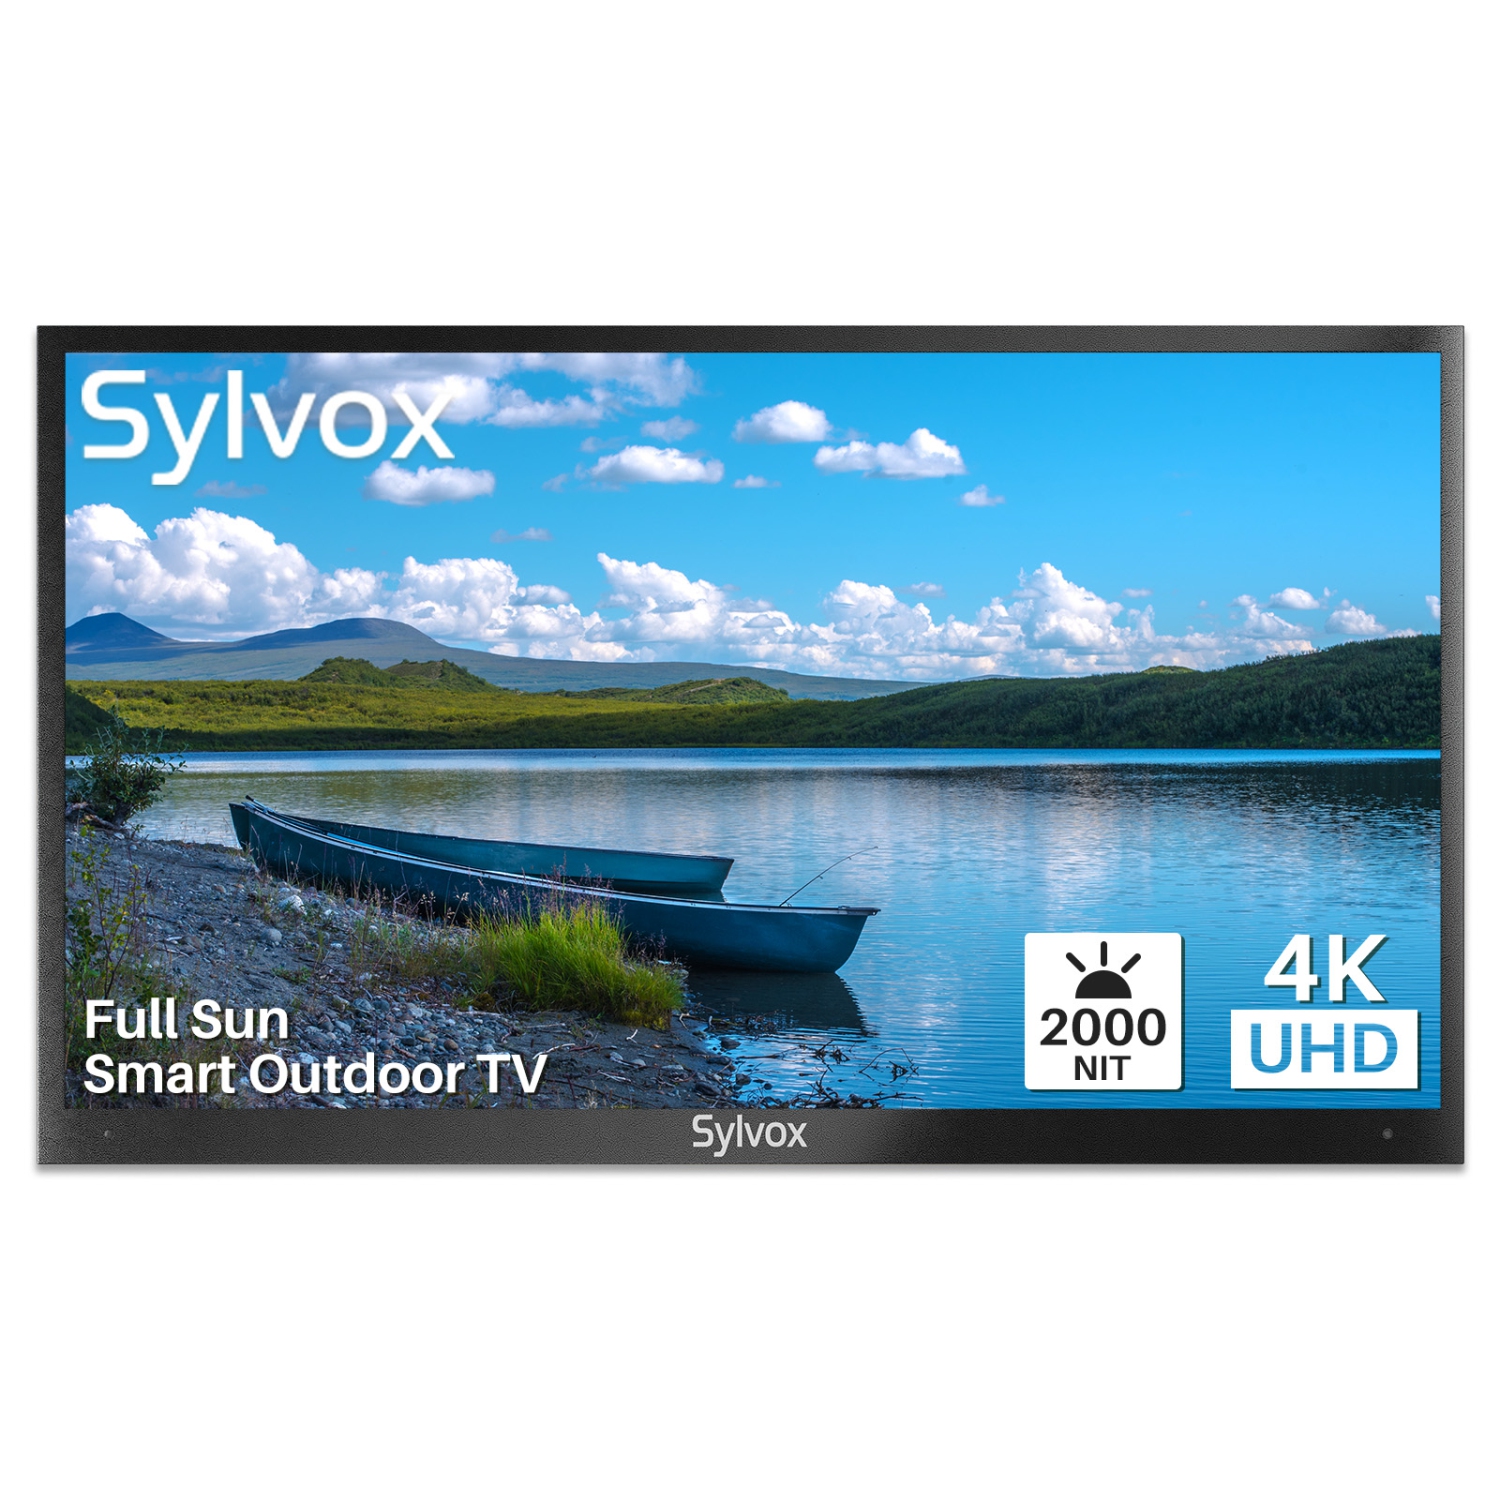 SYLVOX 75 inch Outdoor TV 2000 nits Full Sun Outdoor Smart TV, 4K UHD TV, IP55 Weatherproof, Built-in Apps, Support Bluetooth & 2.4G WiF